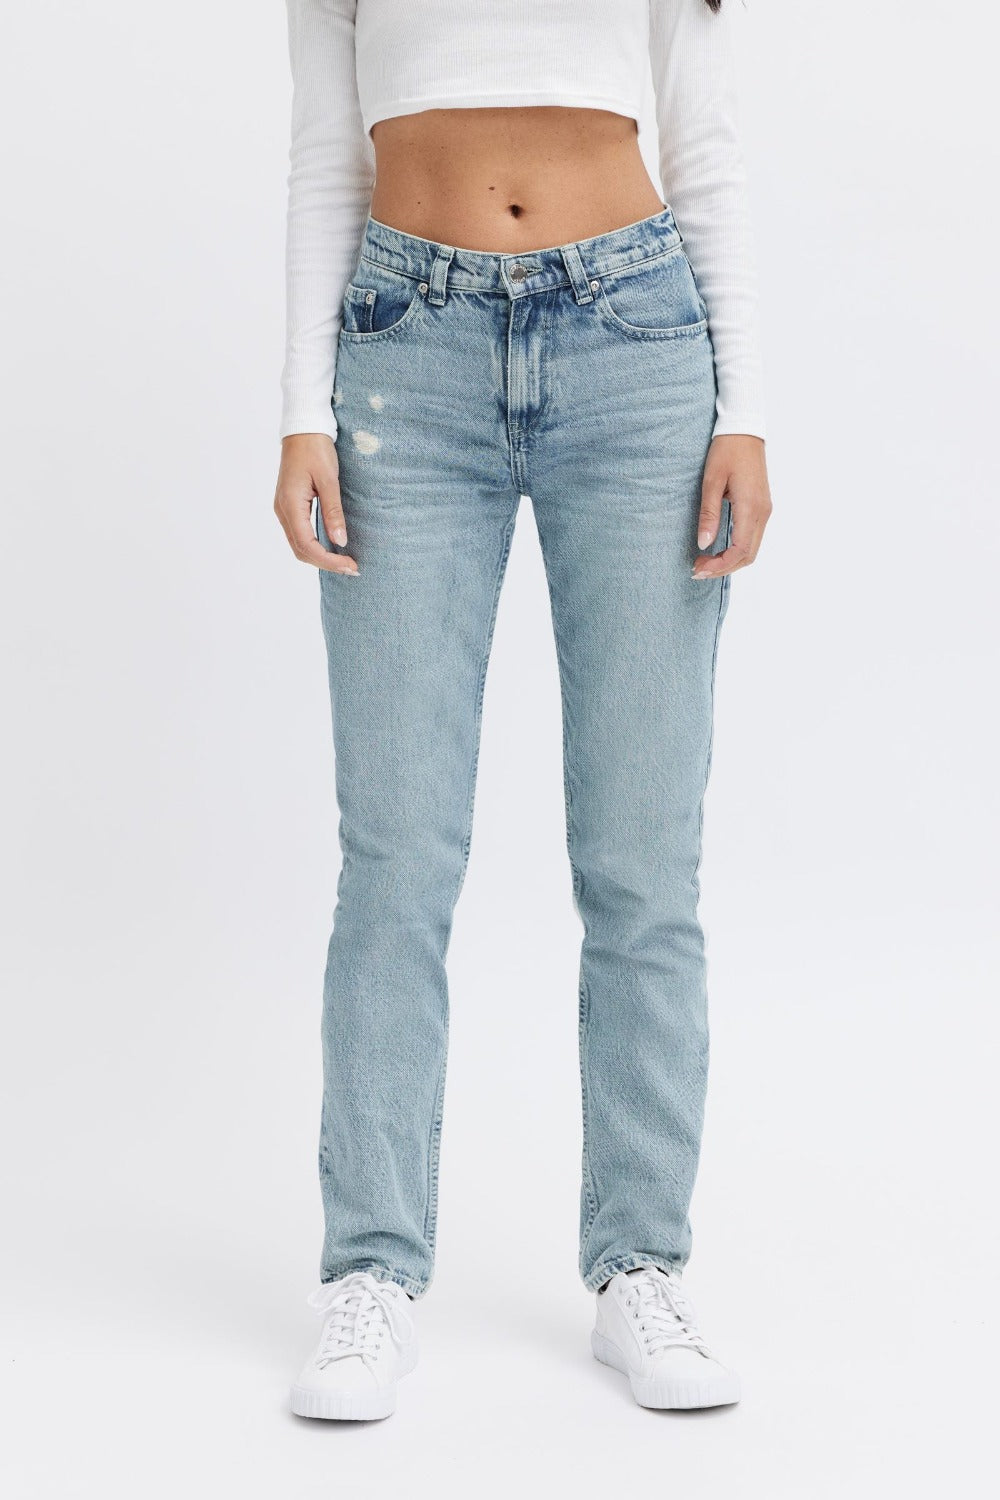 Circular Denim Fashion - Lease Aqua Jeans